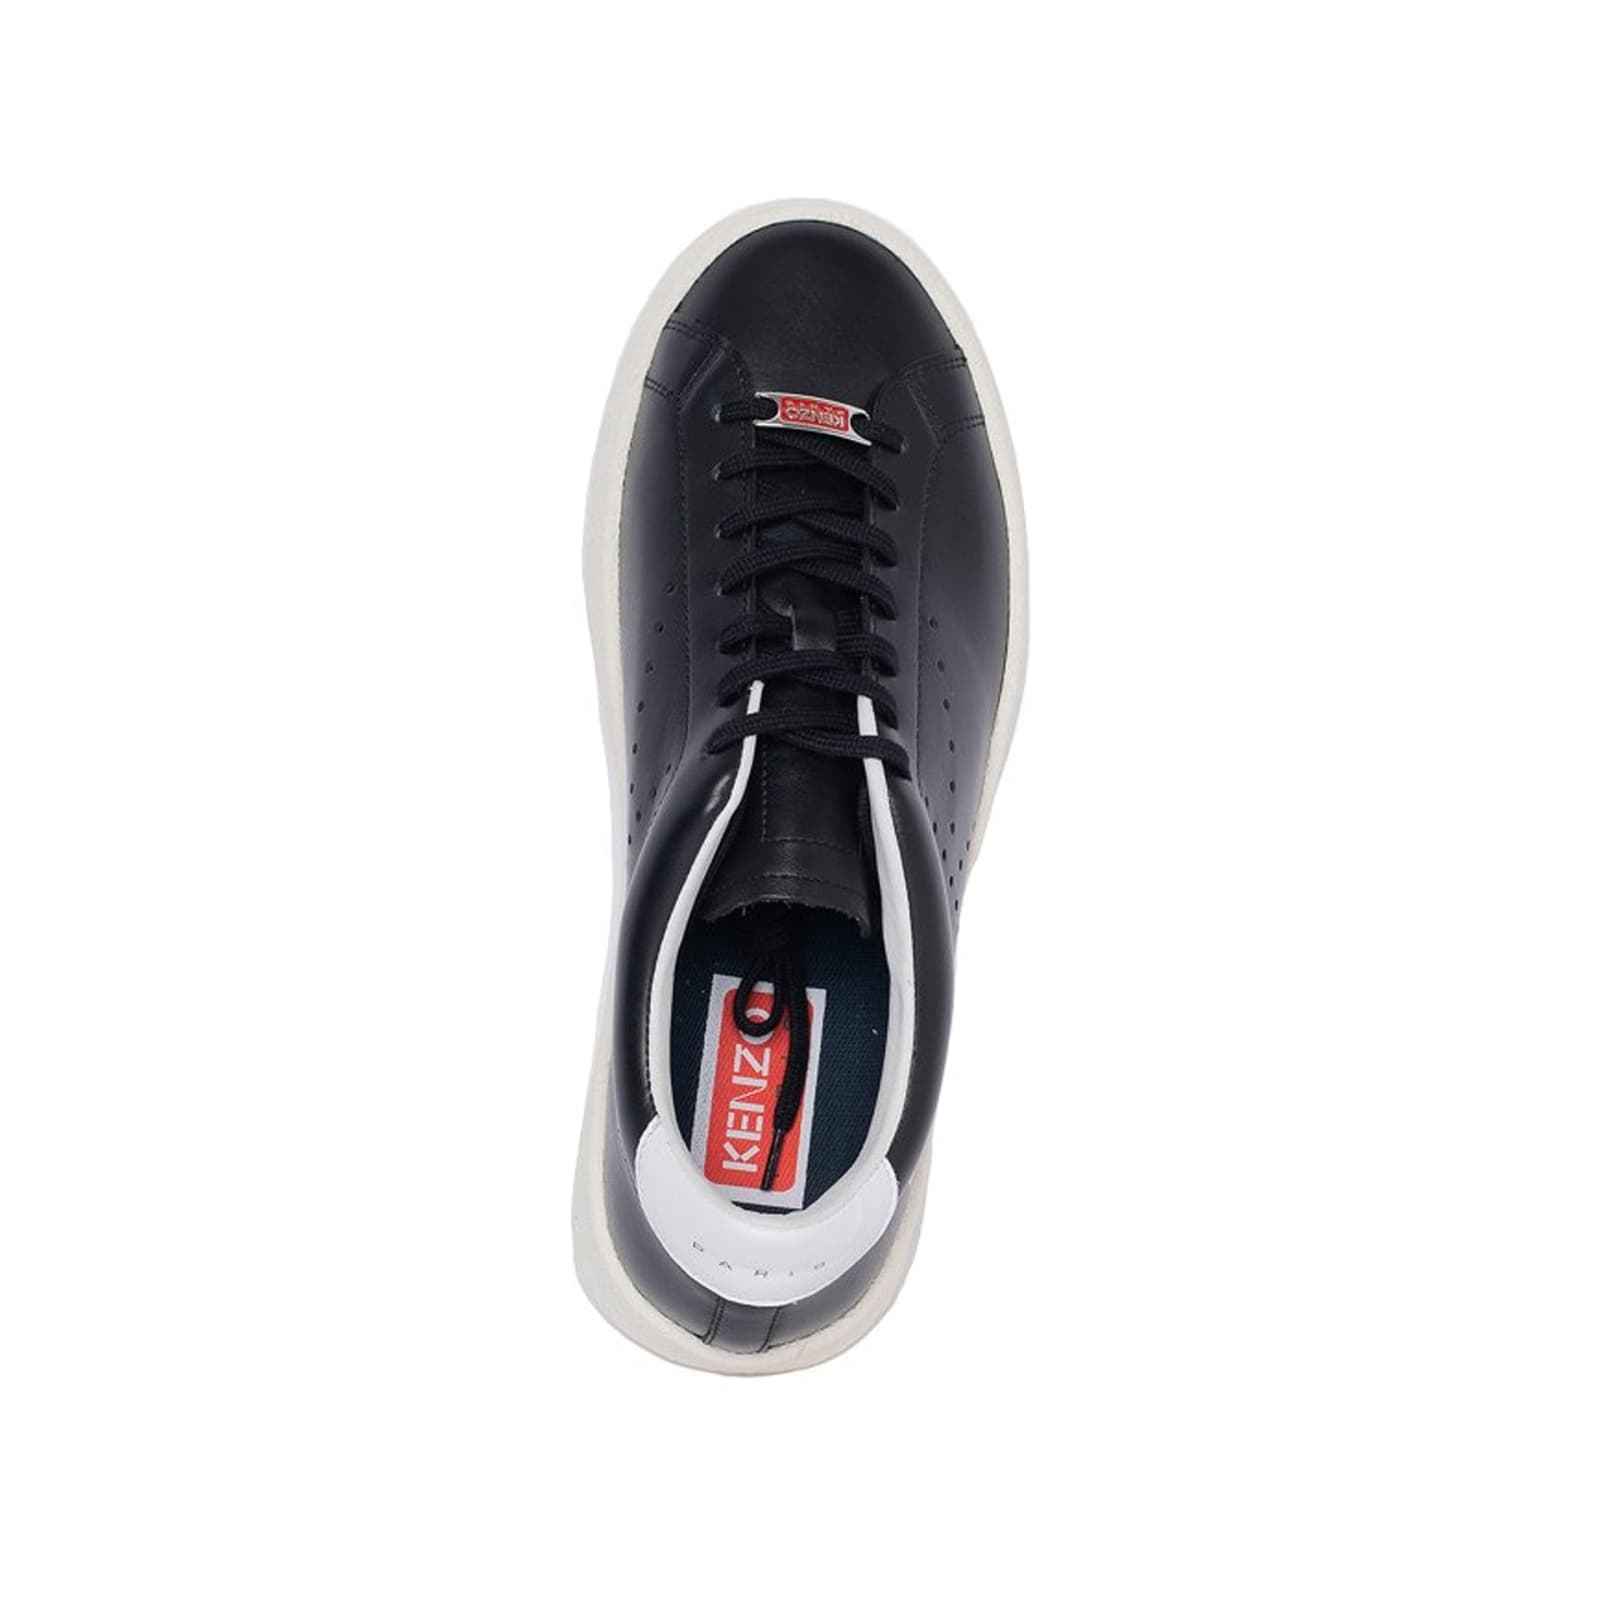 Shop Kenzo Leather Sneakers In Black